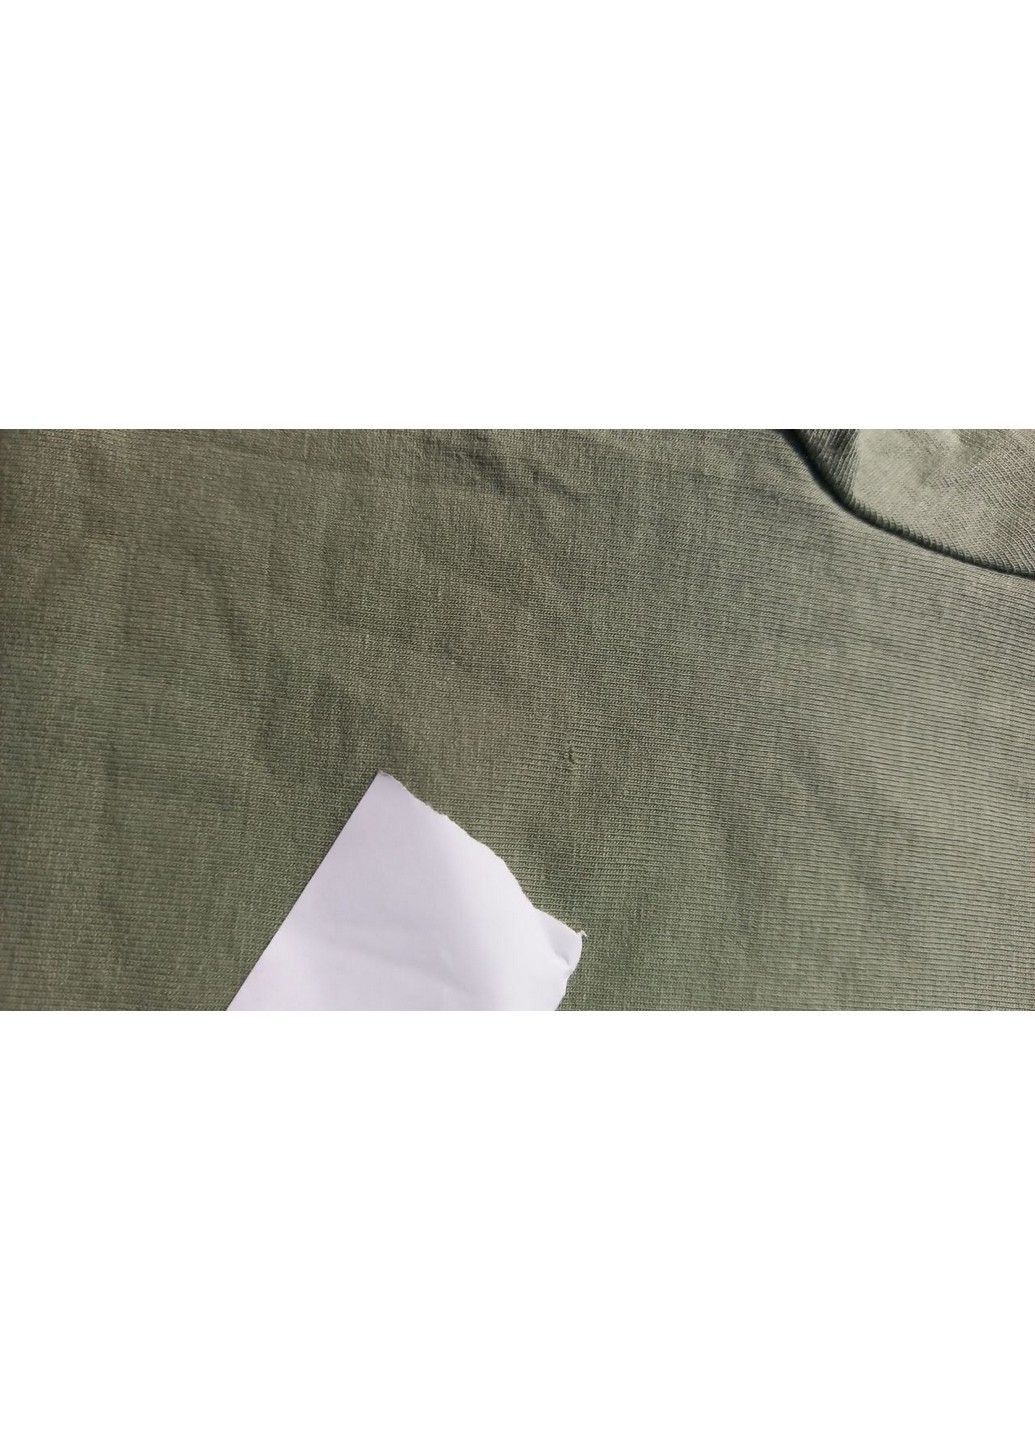 Хаки (оливковая) футболка с микро-дефектом H&M